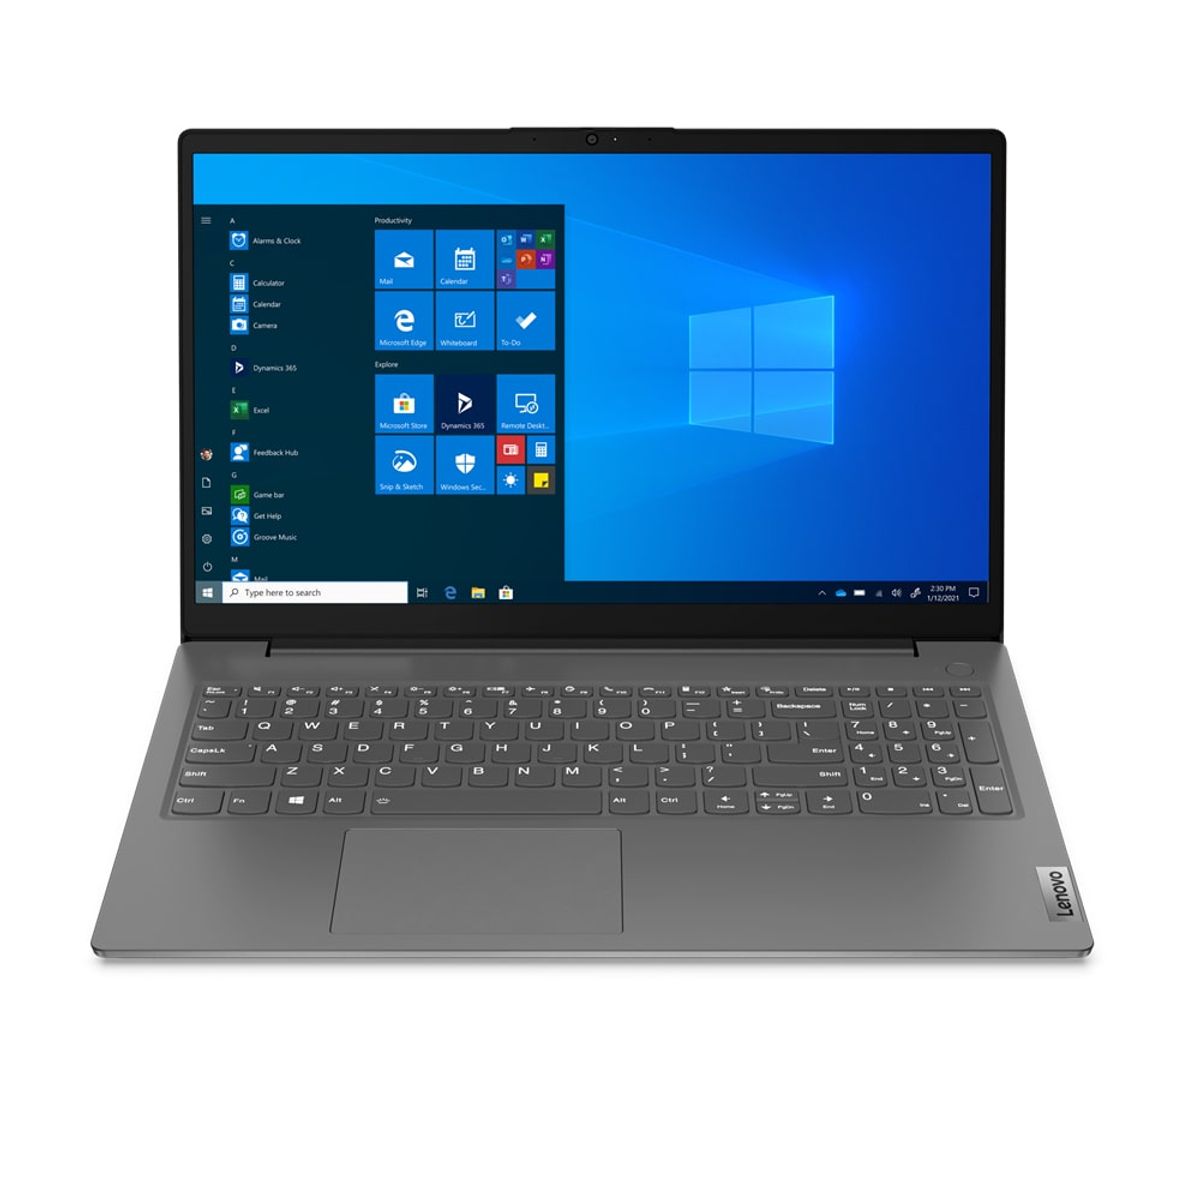 Notebook - Lenovo 82nq0002br I3-10110u 2.10ghz 8gb 256gb Ssd Intel Hd Graphics Windows 10 Professional V15 15,6" Polegadas